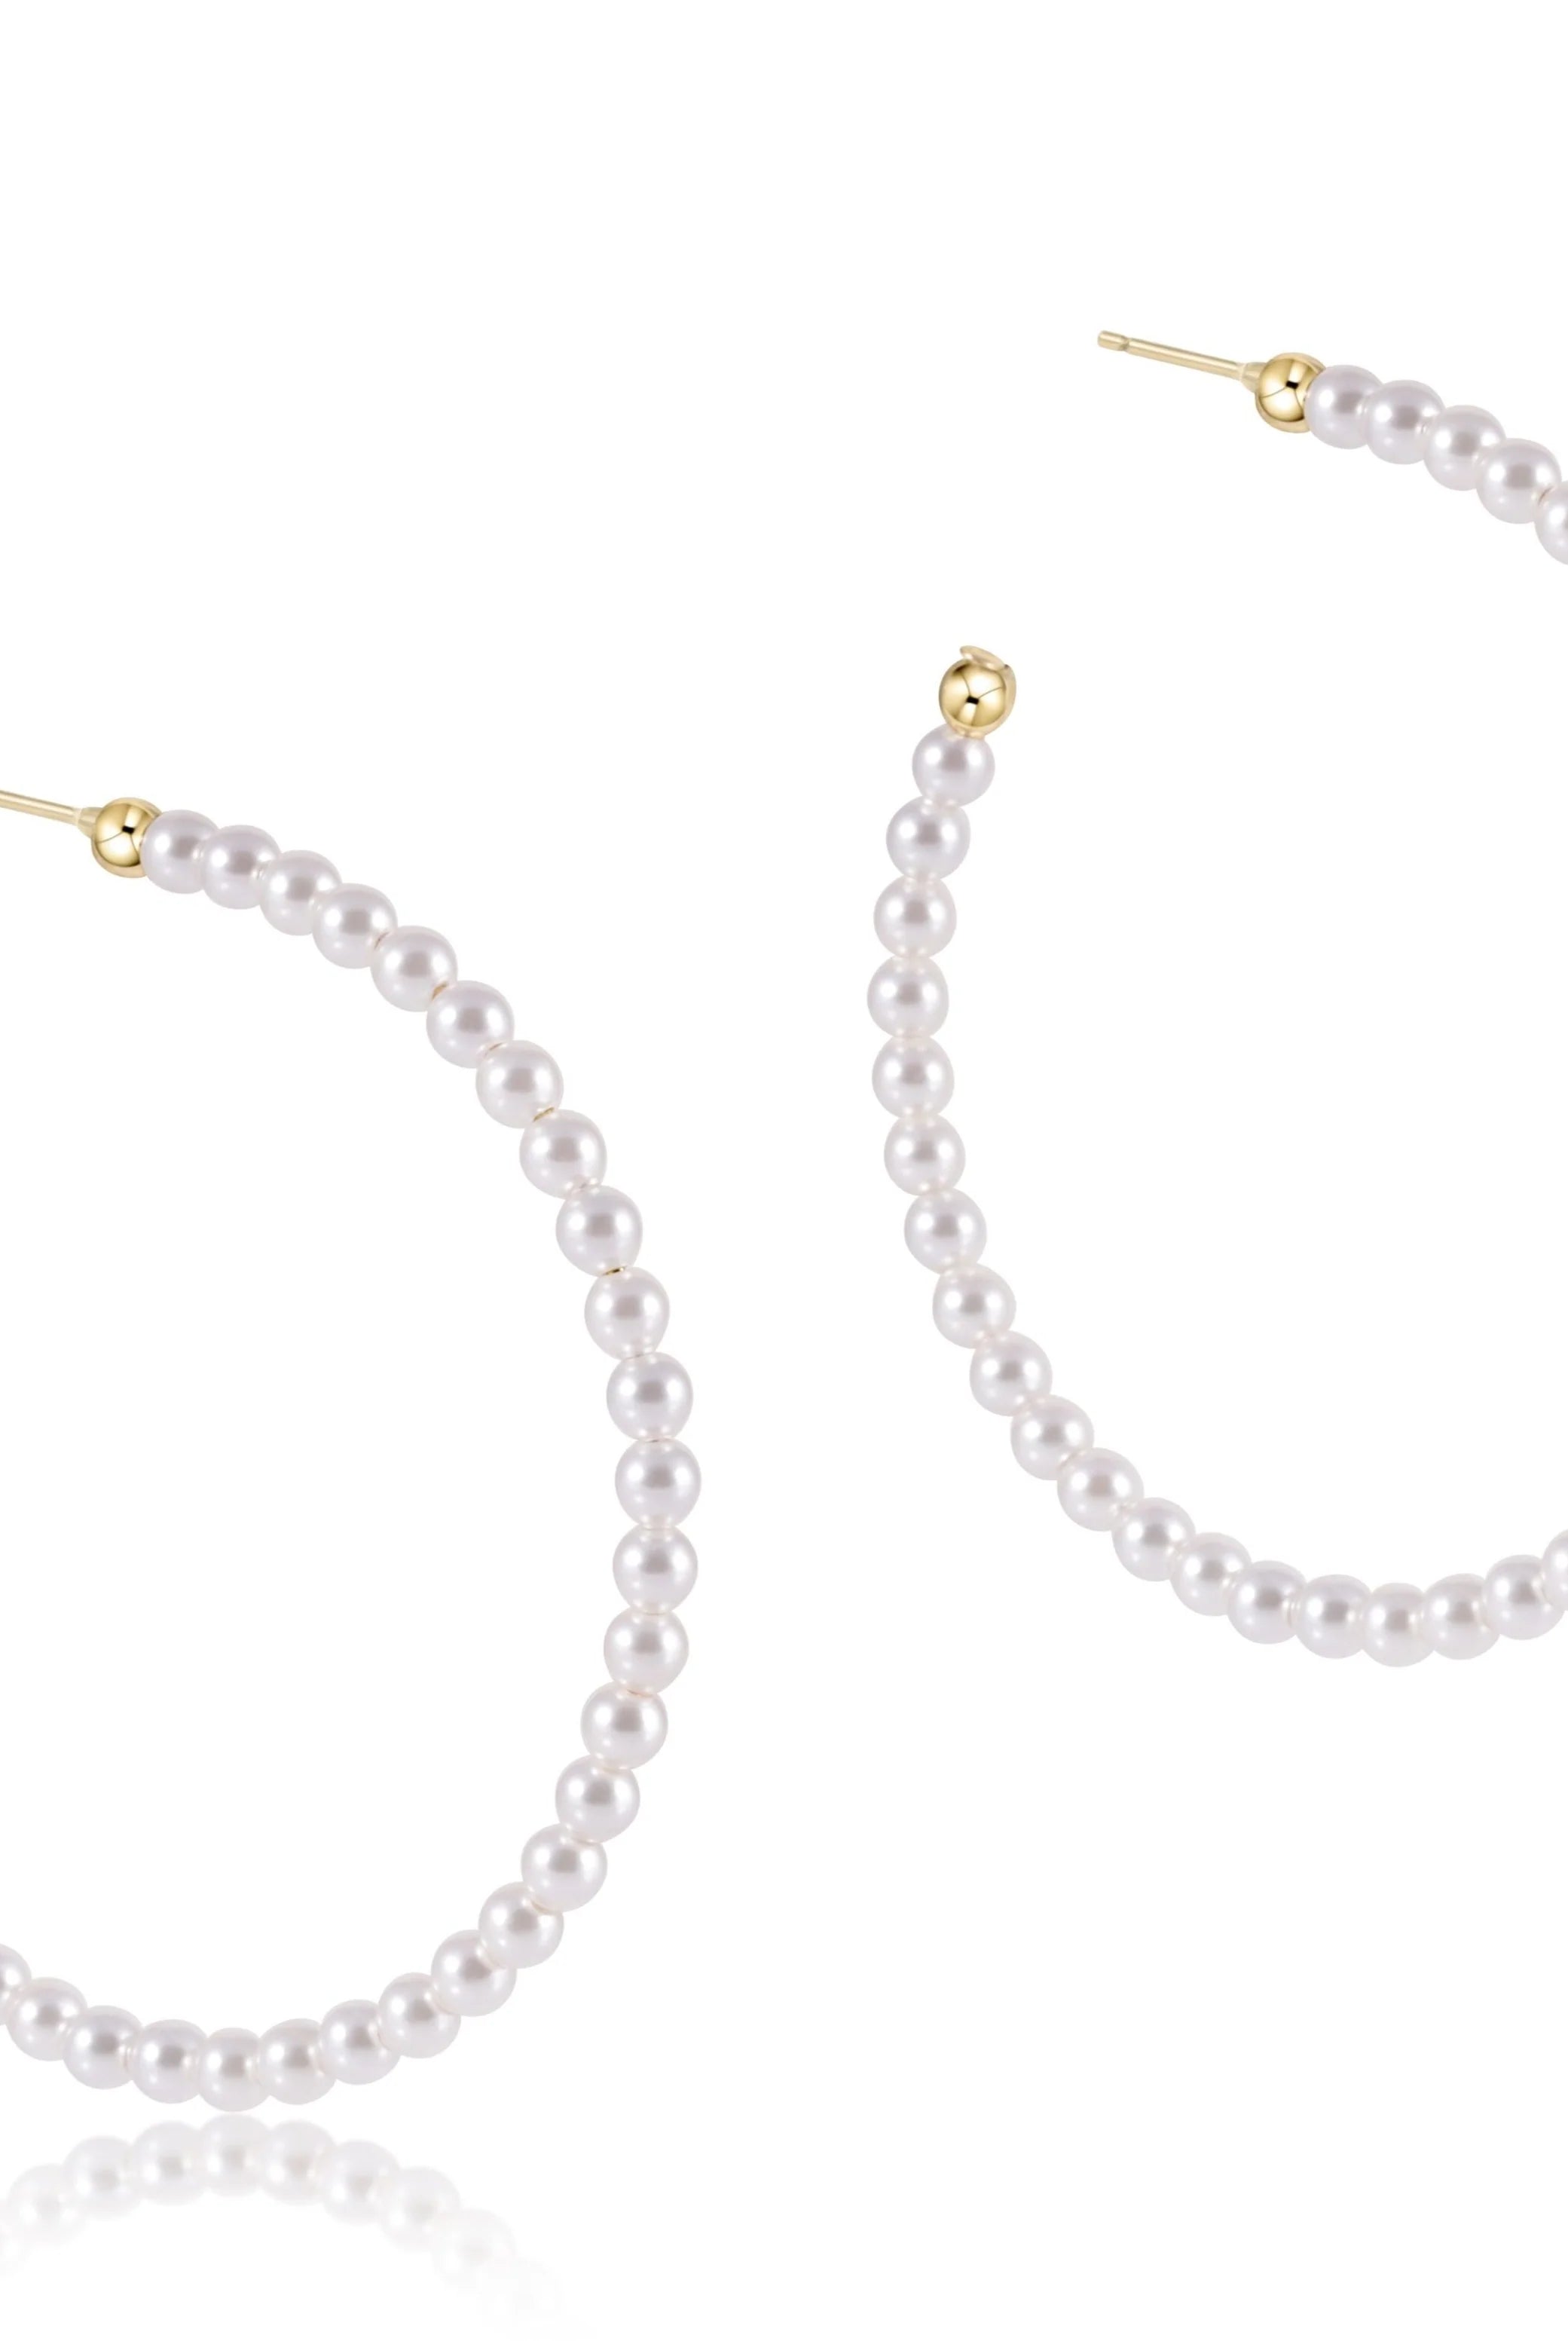 Beaded Gemstone— 3mm Pearl-Earrings-eNewton-The Lovely Closet, Women's Fashion Boutique in Alexandria, KY